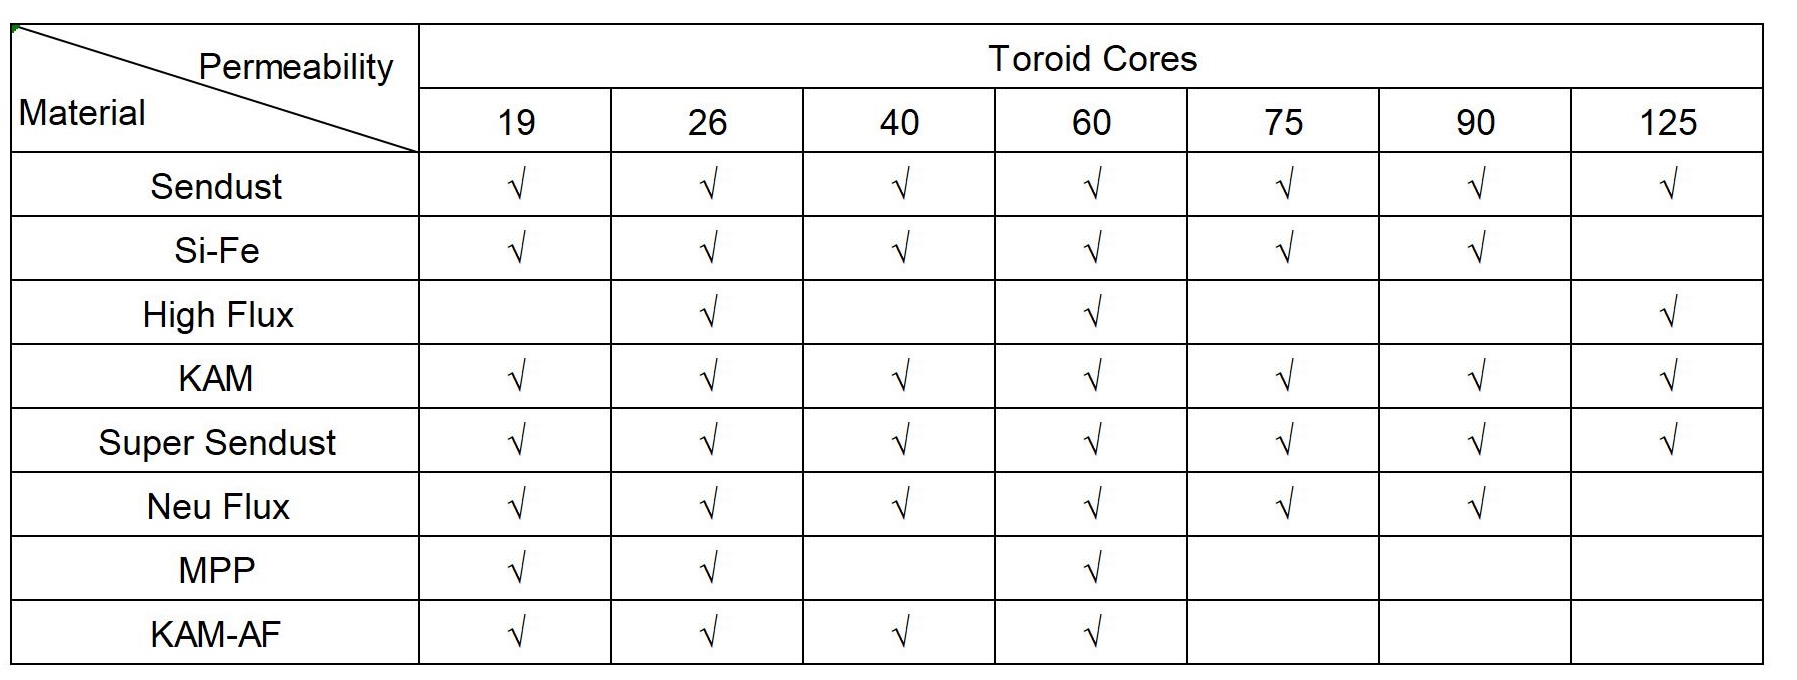 toroid core perm range.jpg